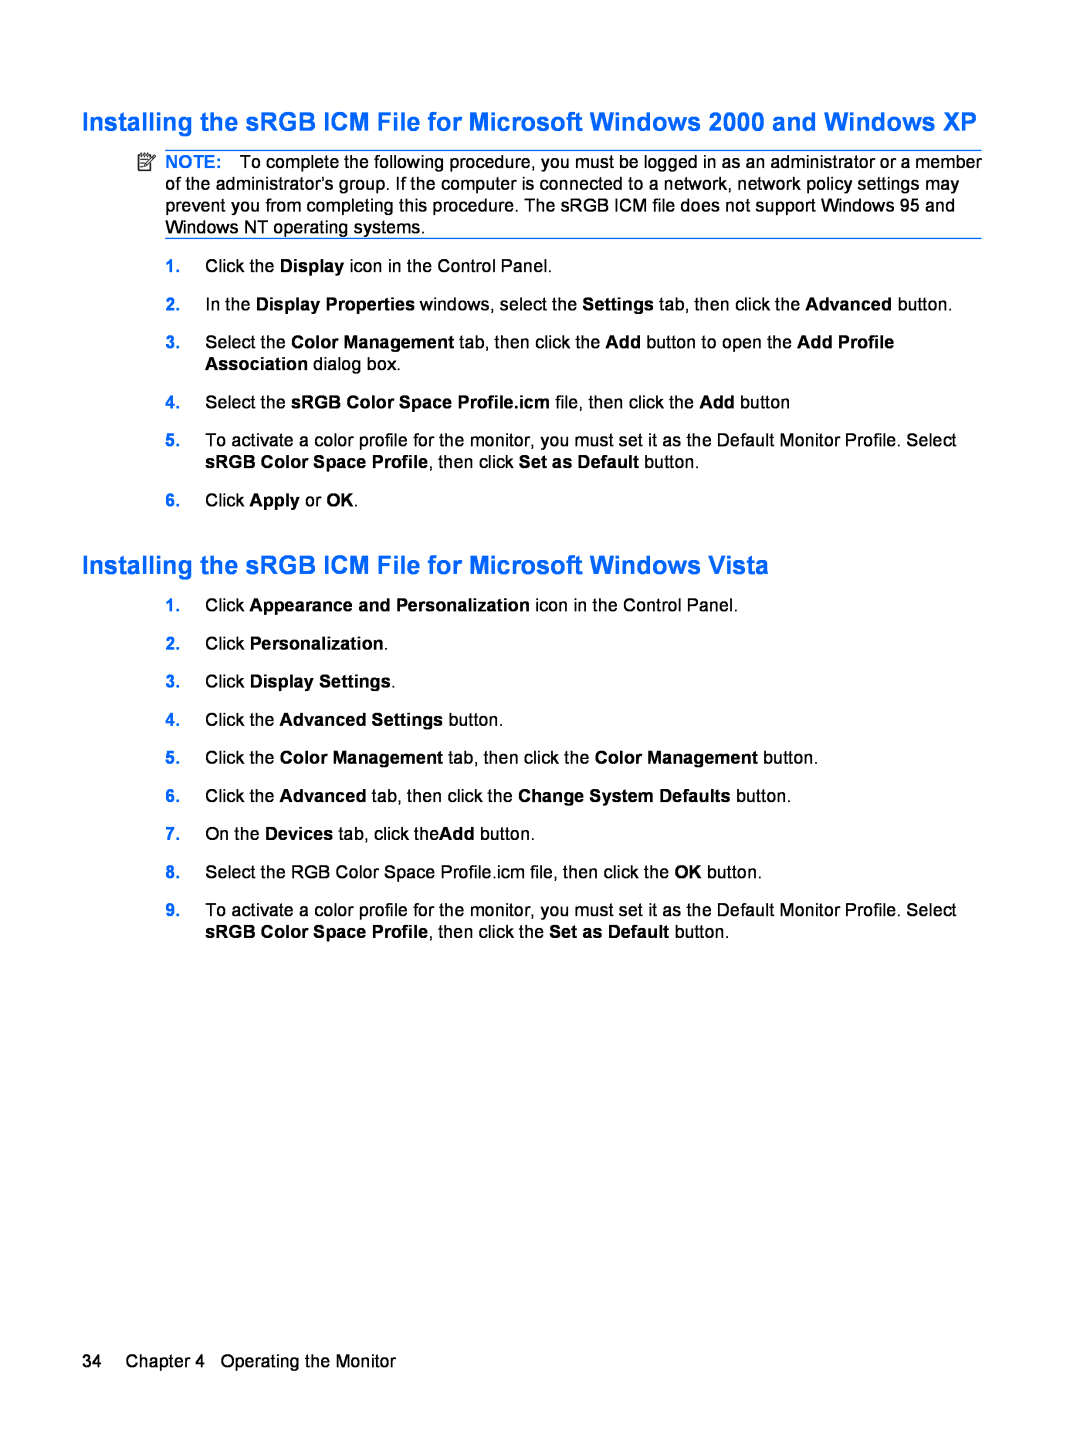 HP LP2275w manual Installing the sRGB ICM File for Microsoft Windows Vista, Click Personalization 3. Click Display Settings 